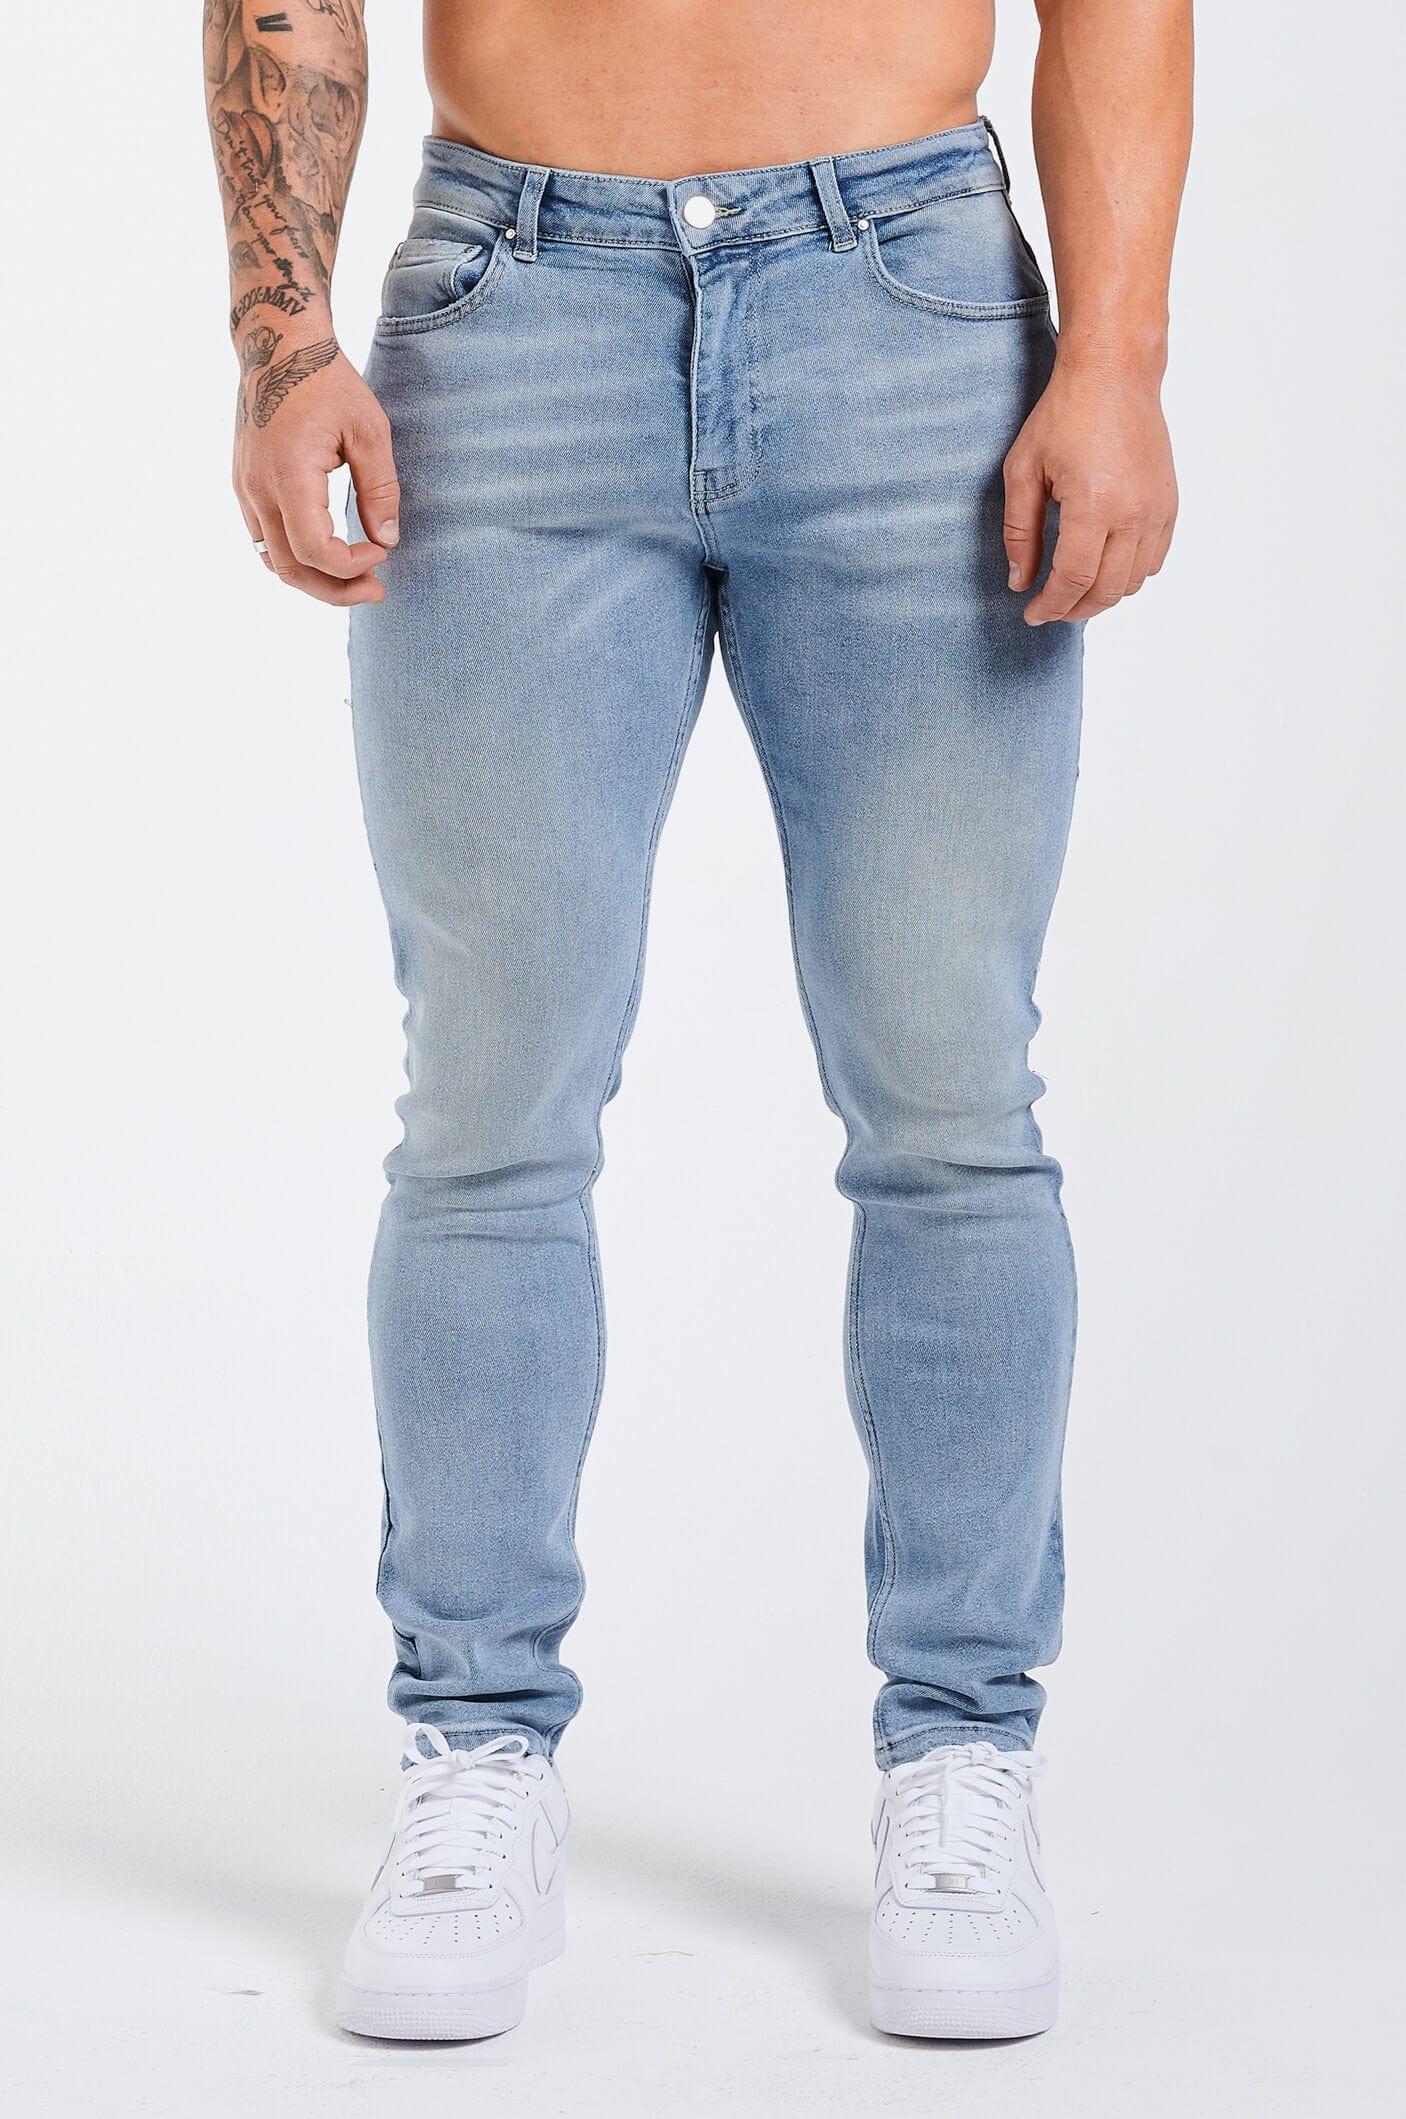 Legend London Jeans - slim 2.0 SLIM FIT JEANS 2.0 - SANDY BLUE